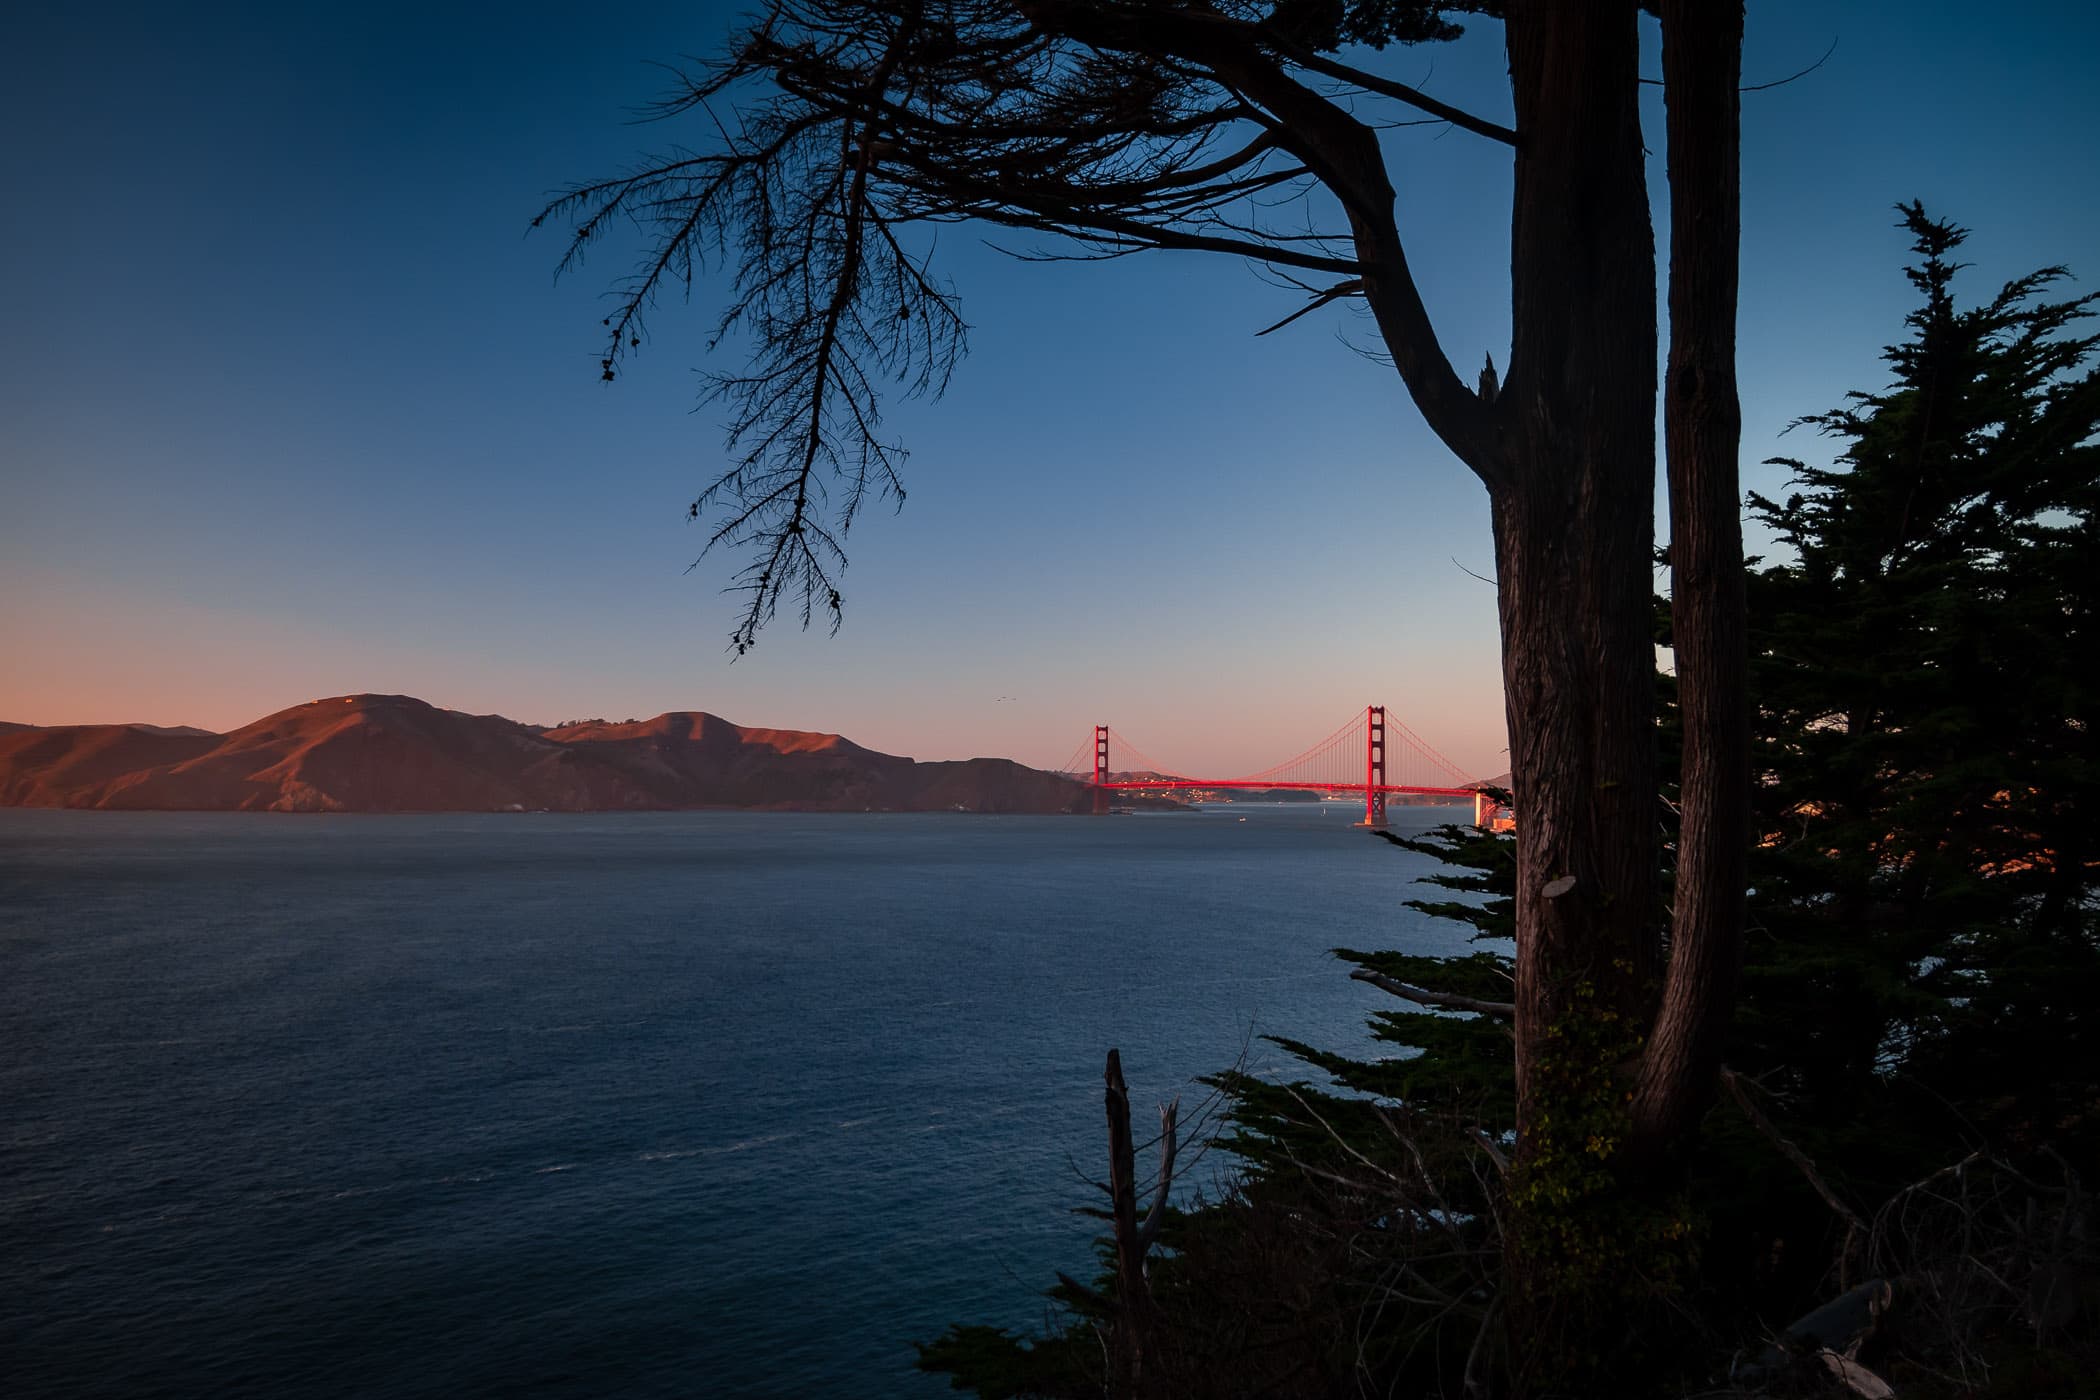 The last light of day illuminates San Francisco's Golden Gate Bridge.